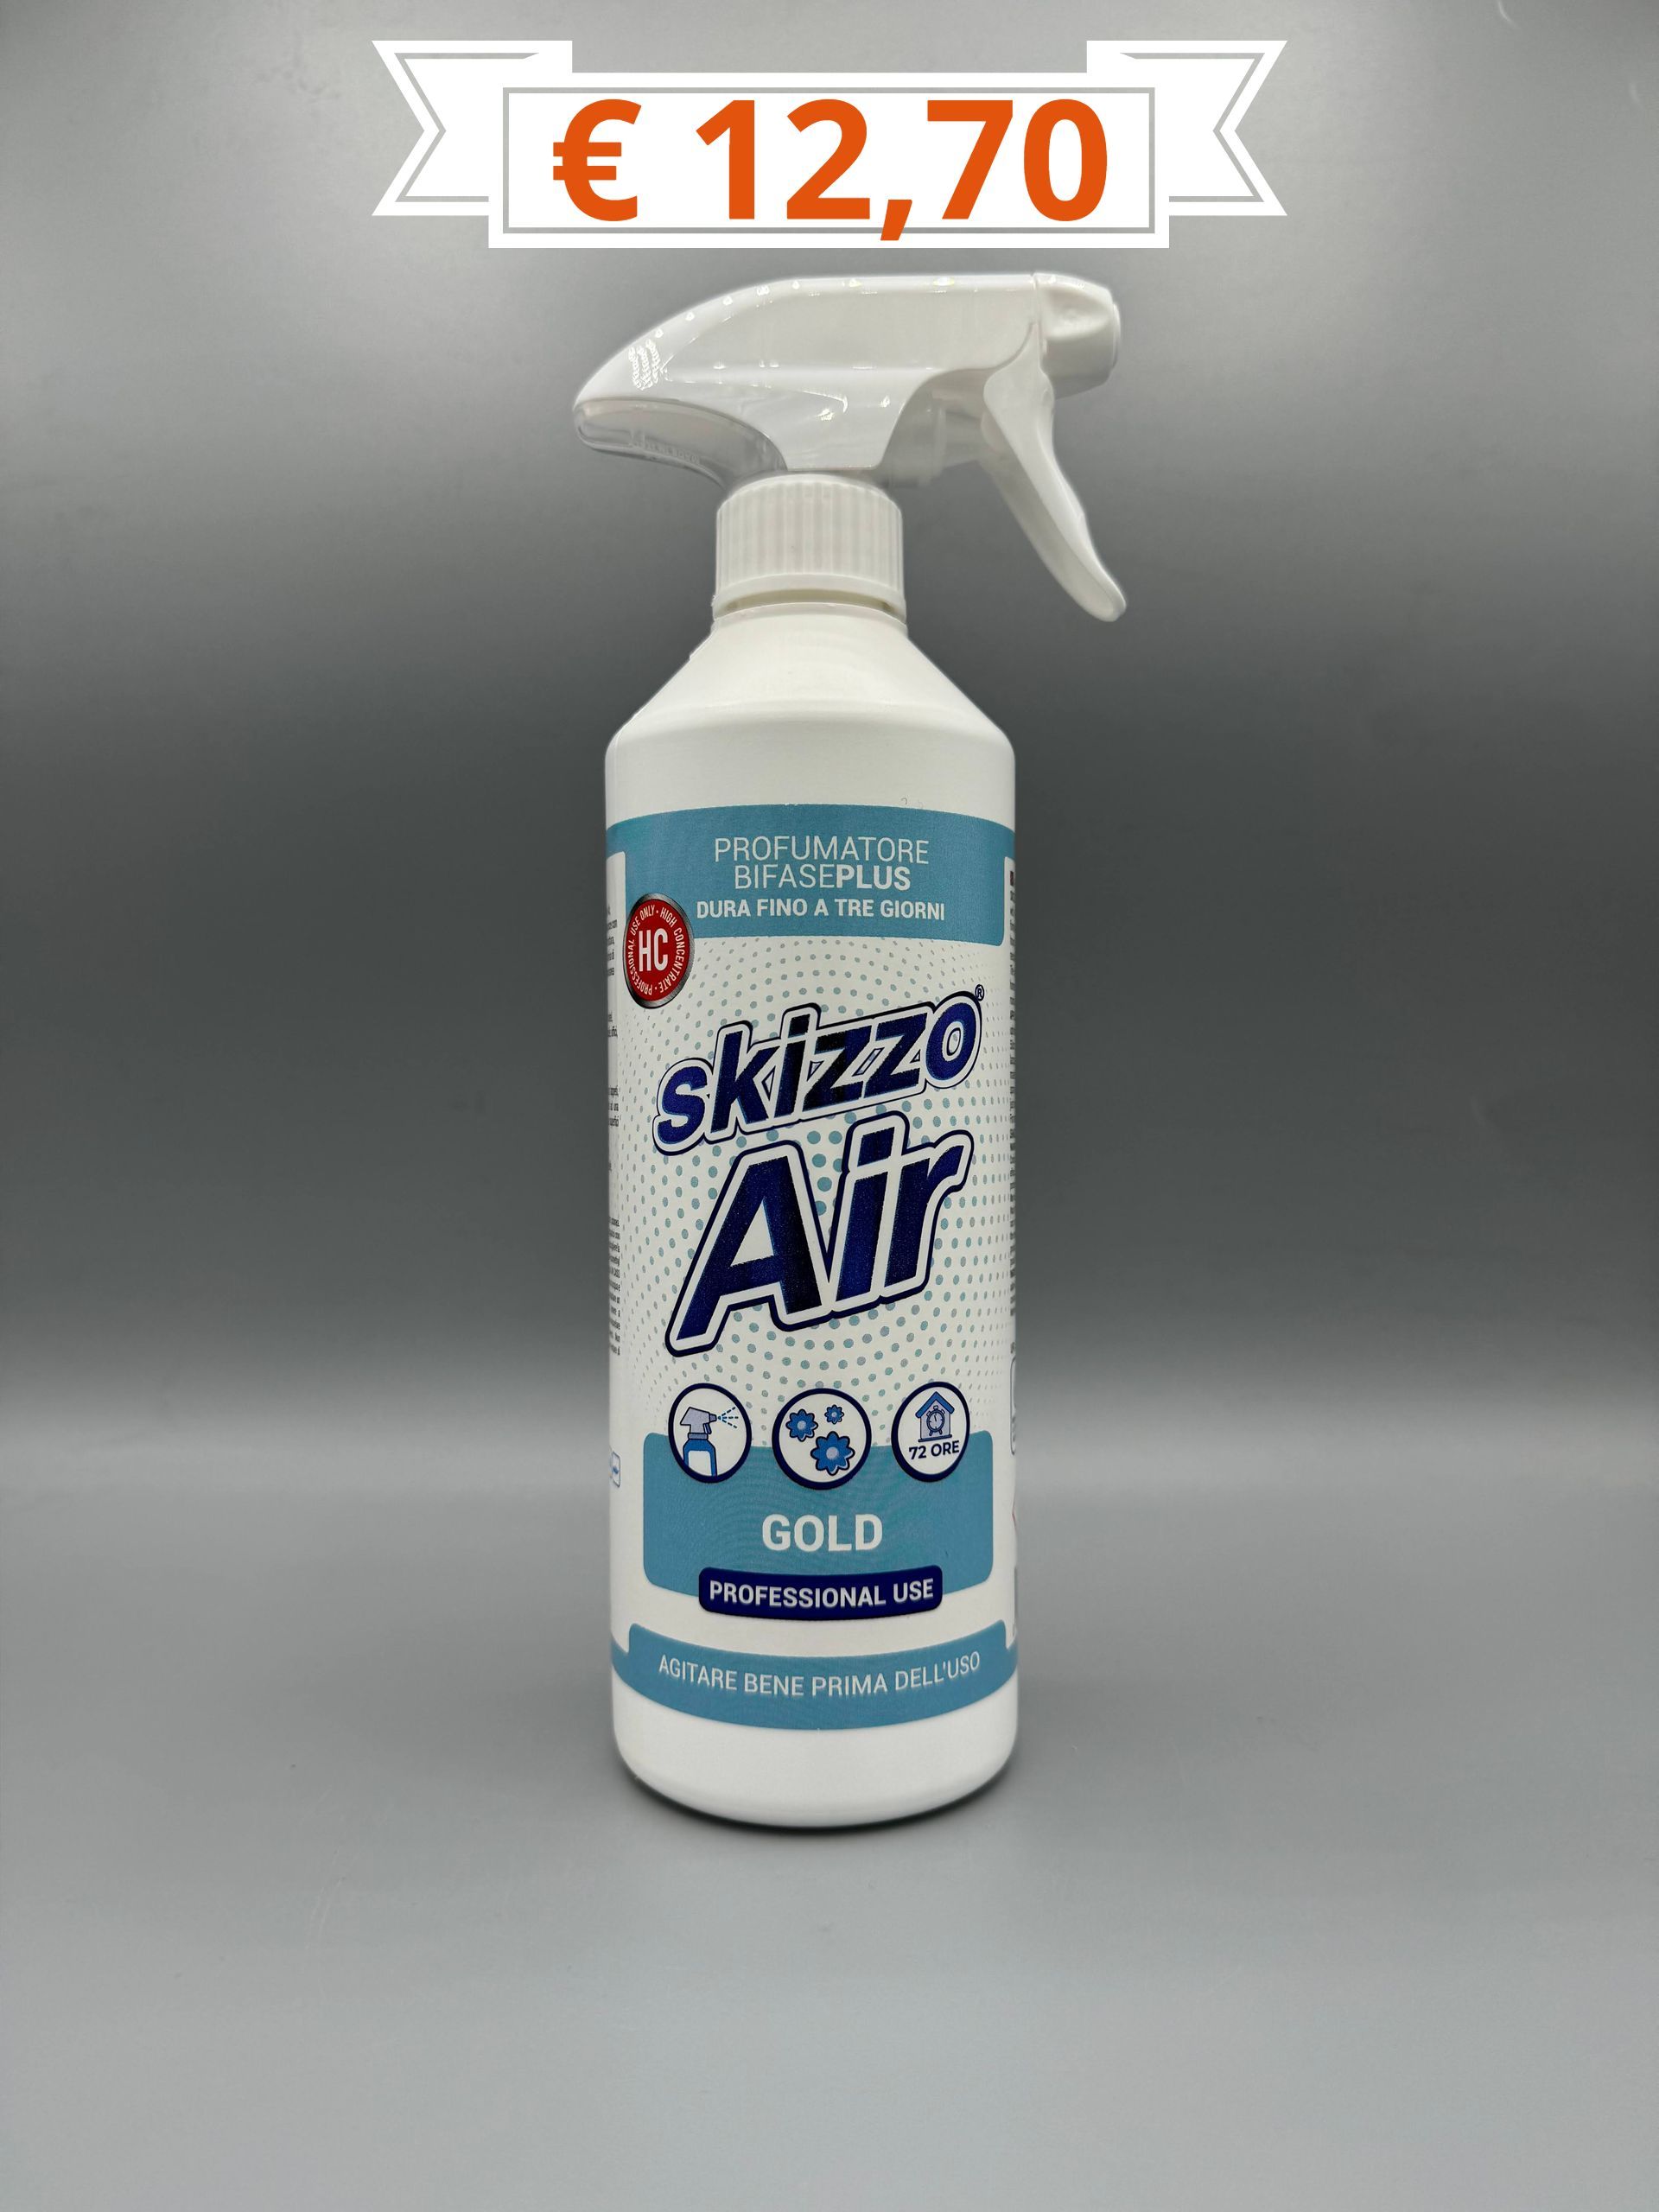 Skizzo Air profumatore deodorante